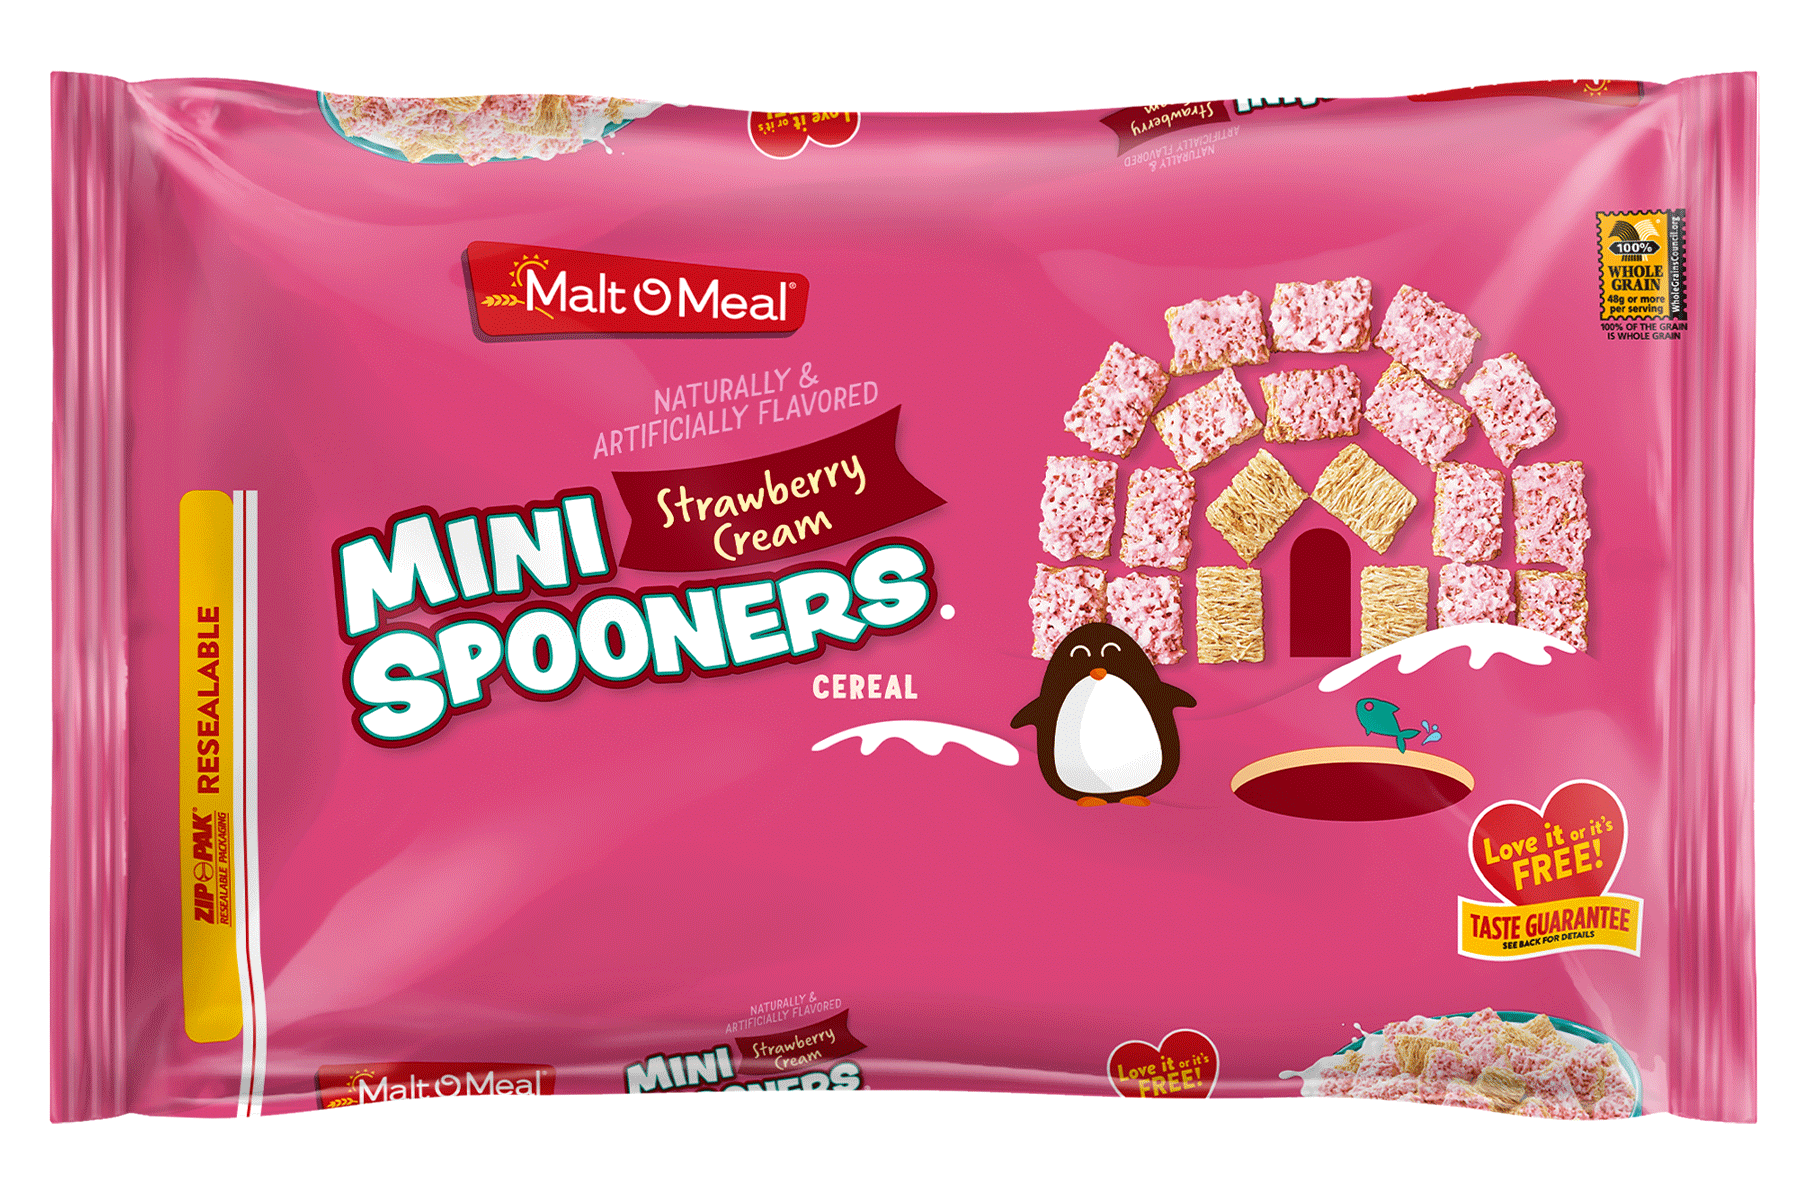 New Malt-O-Meal Strawberry Cream Mini Spooners Cereal Bag